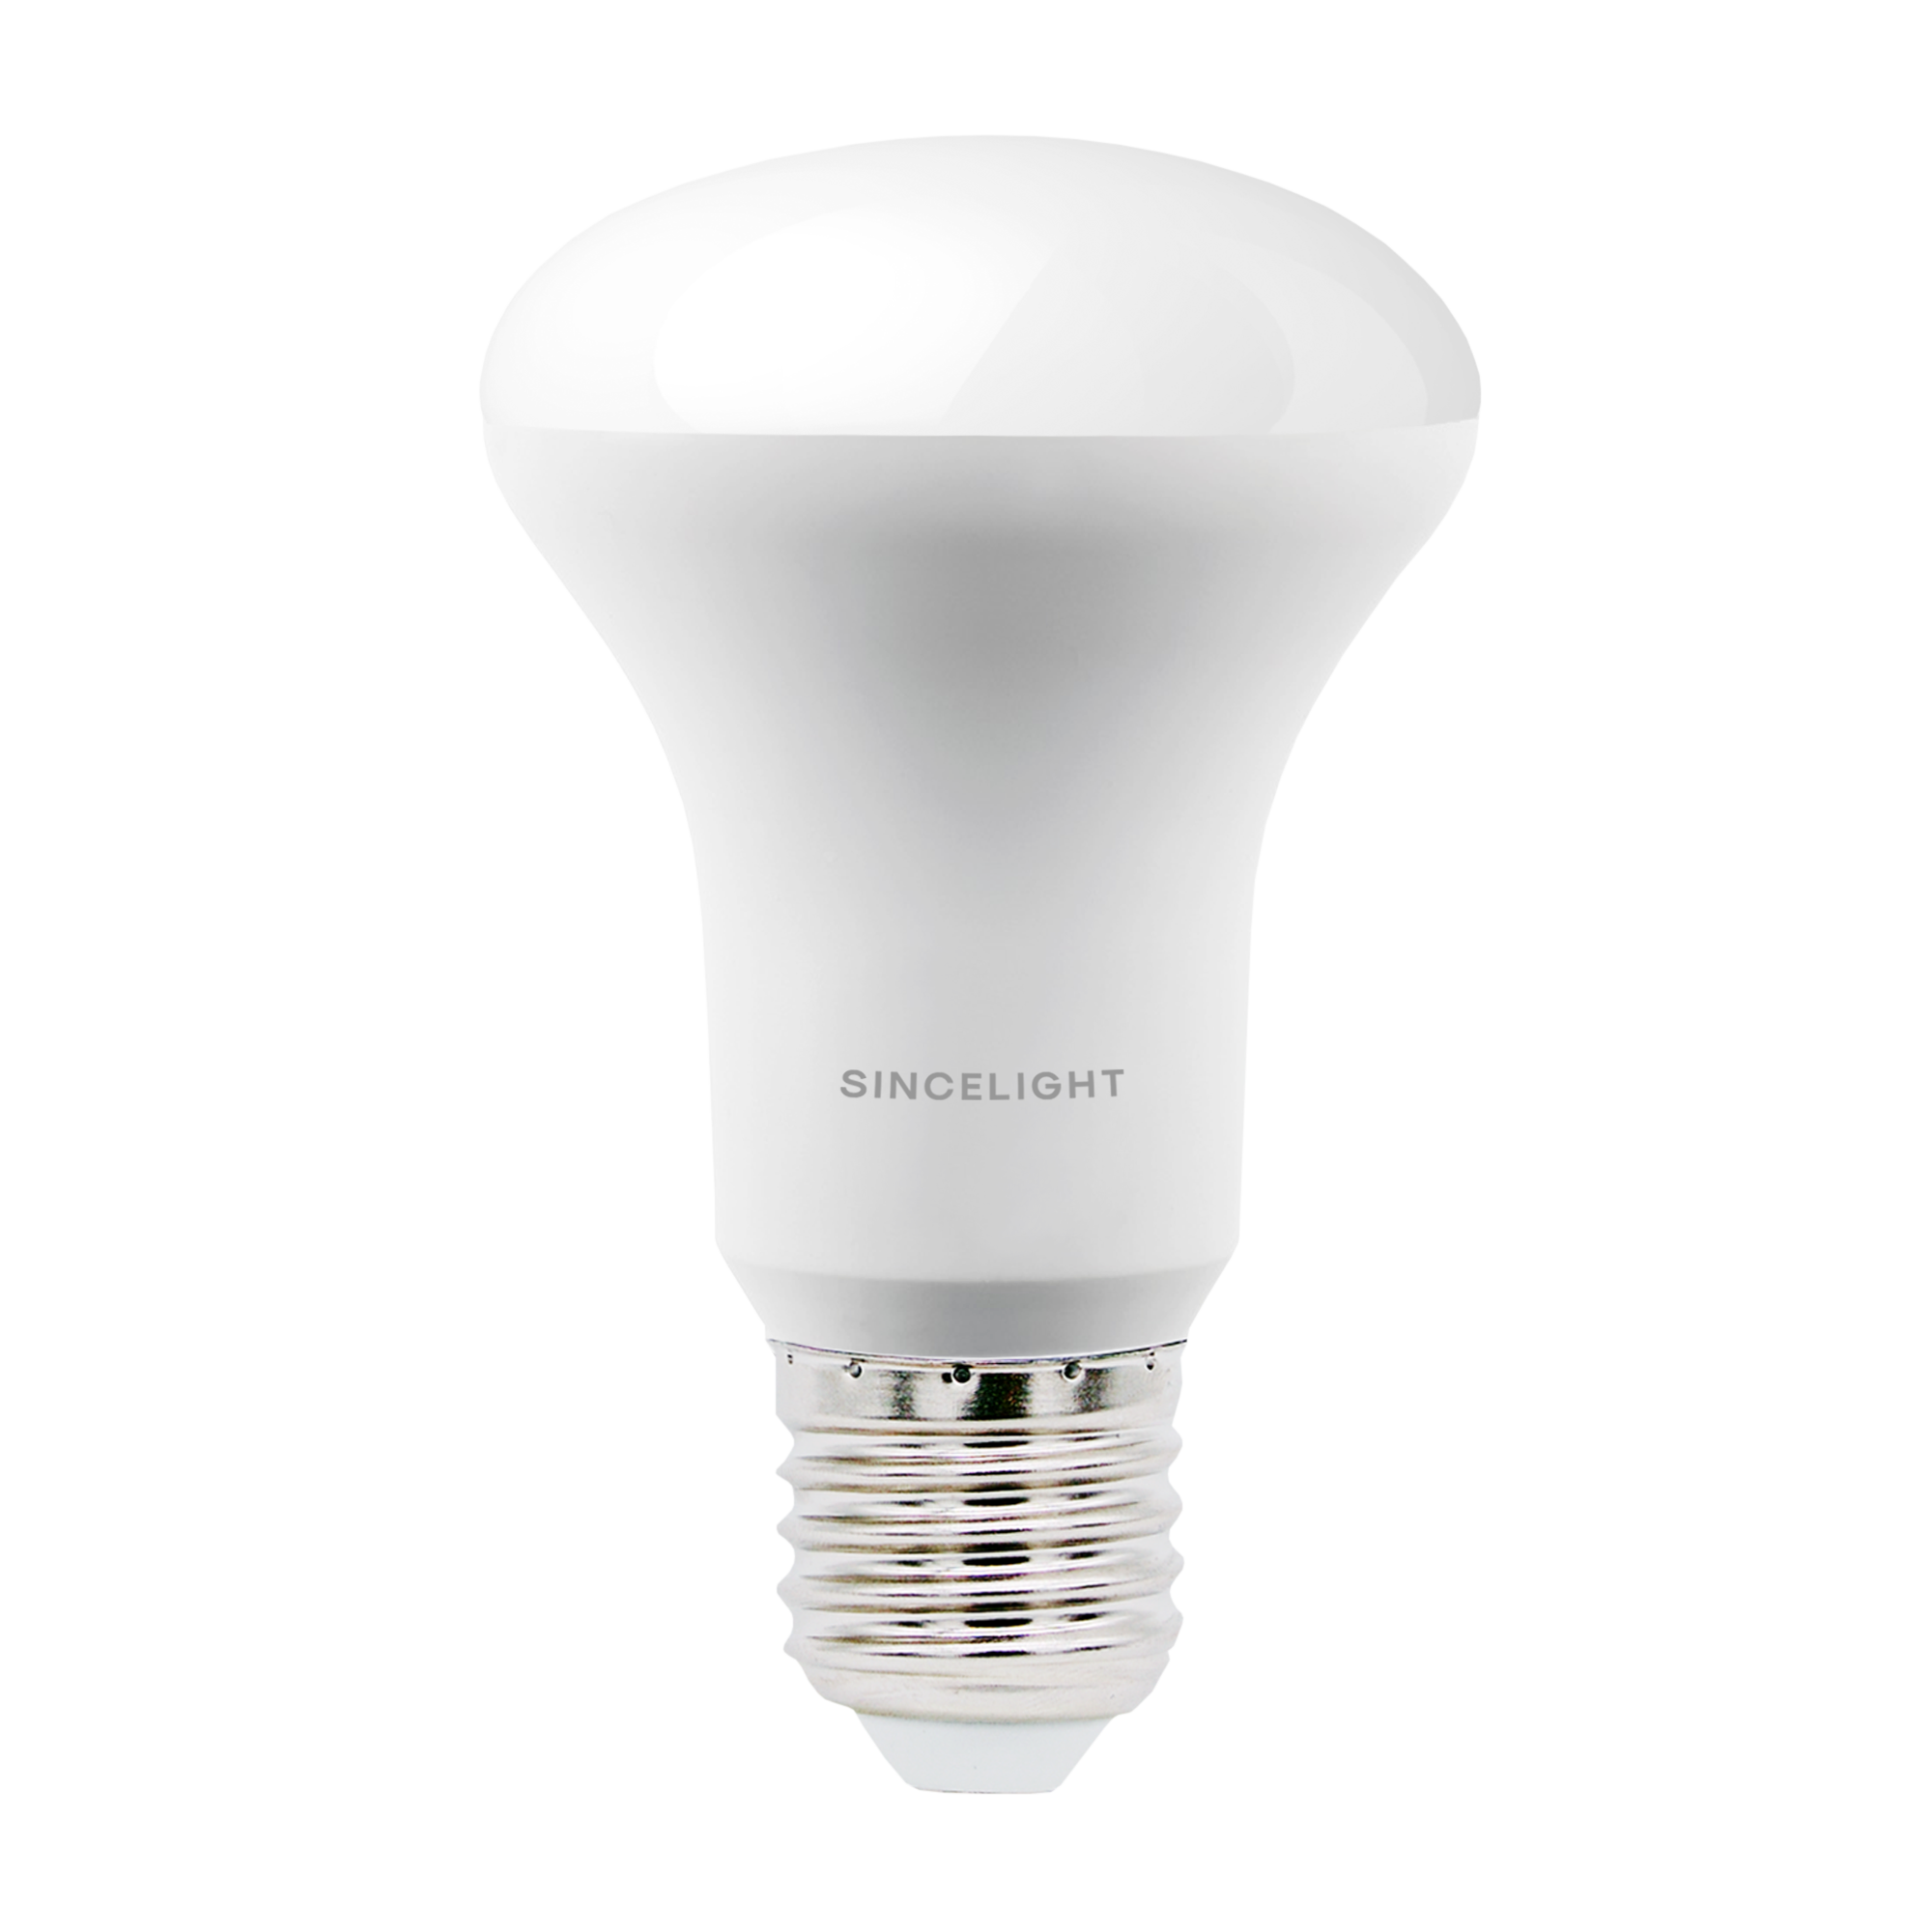 7W LED R63 Reflector Bulb with E27 Cap